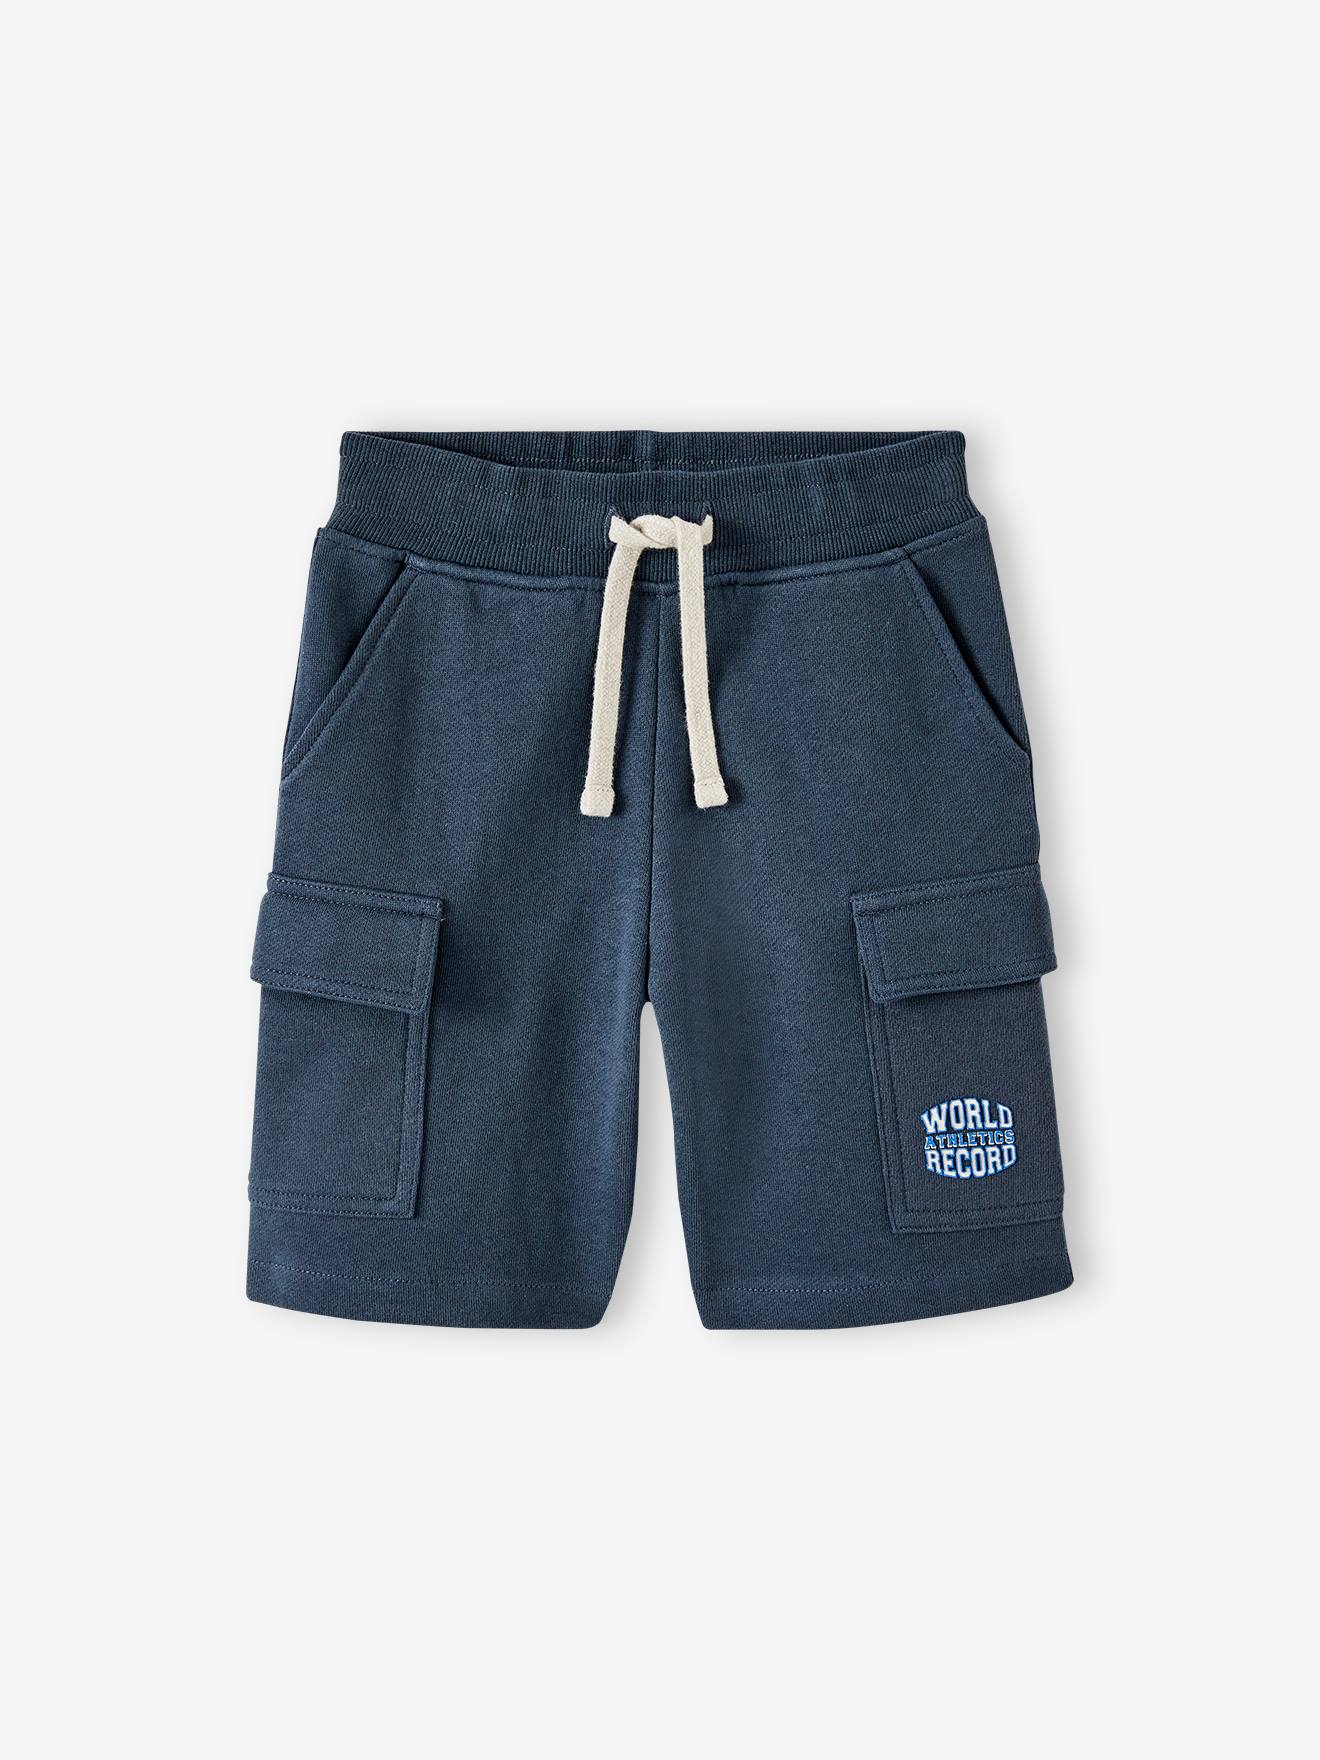 Cargo-Style Sports Shorts for Boys navy blue